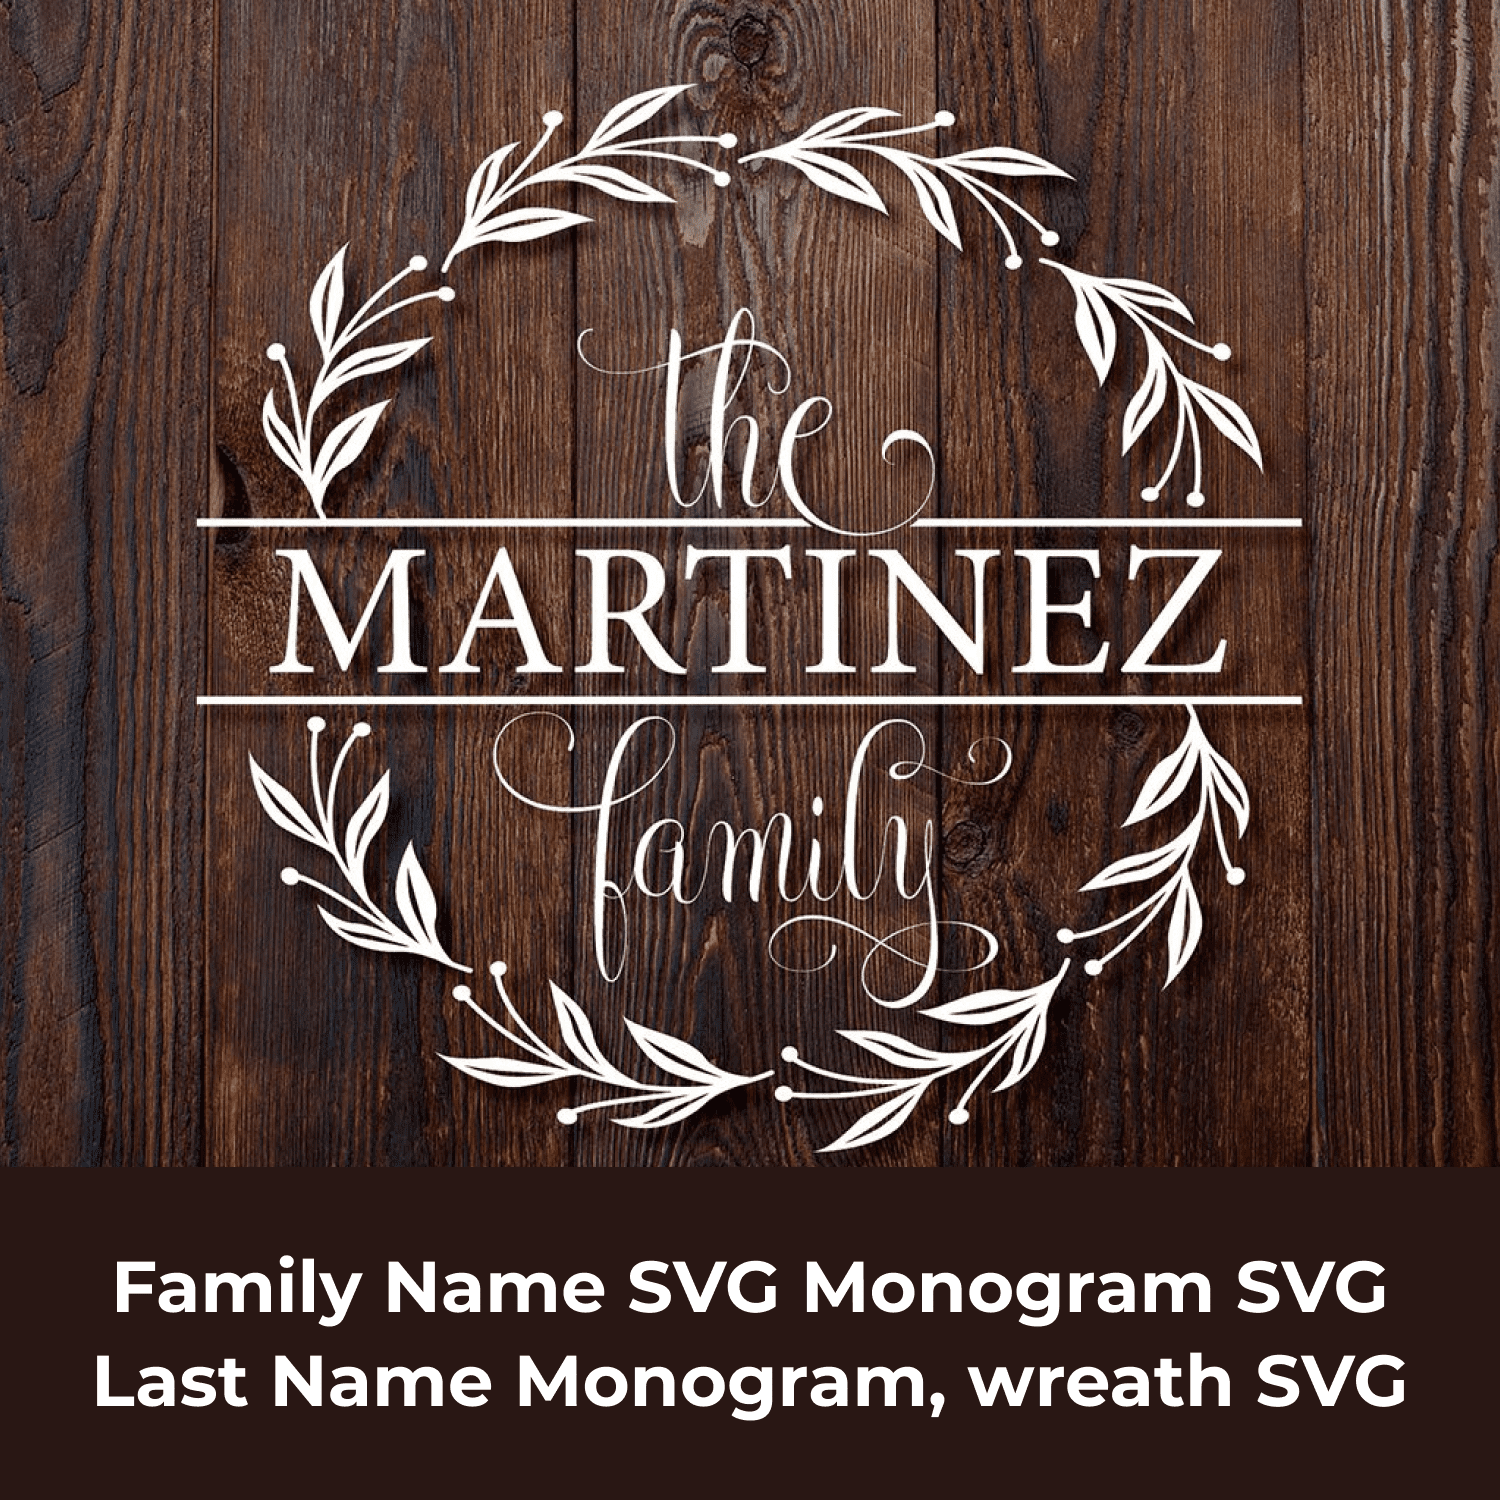 Family Name SVG Monogram SVG Last Name Monogram, Wreath SVG.